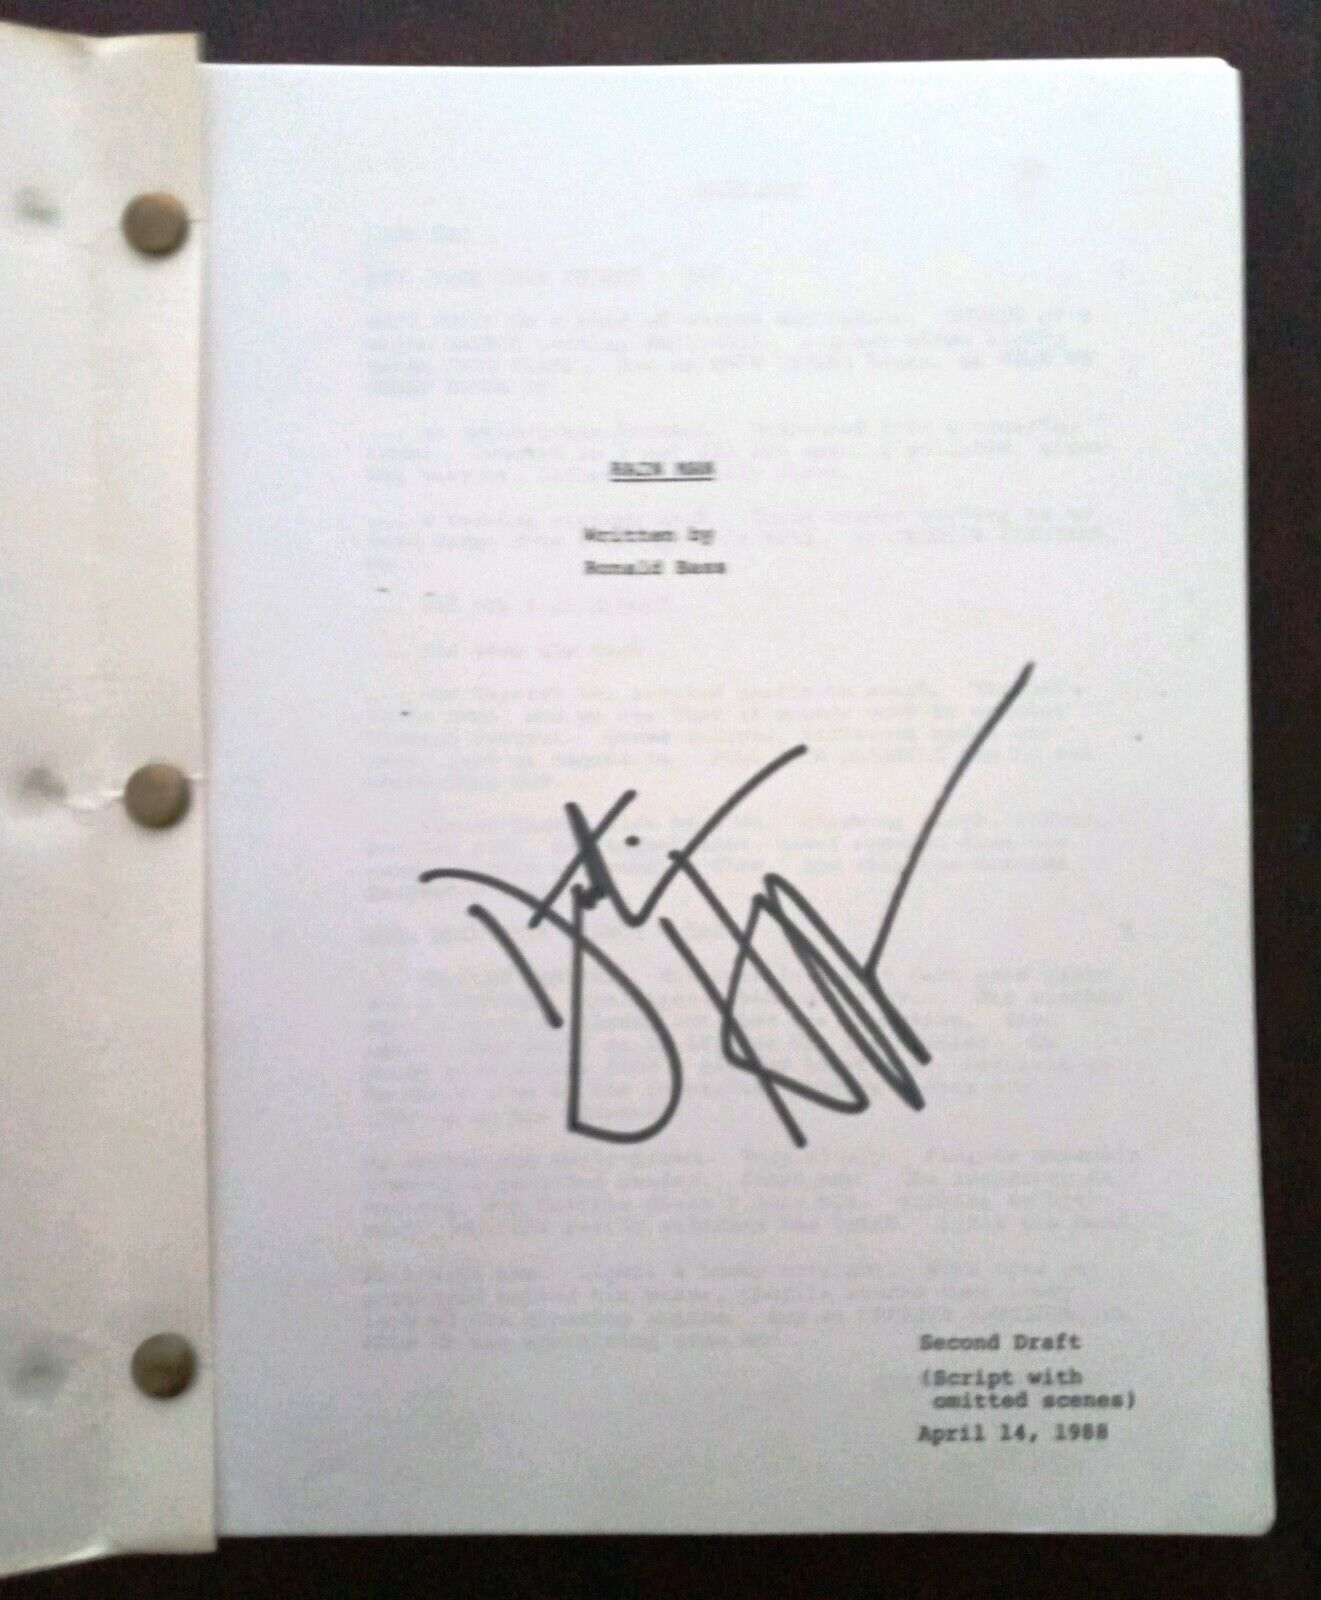 Rain Man: 159 Page 2nd Draft Script (04/14/1988) & Dustin Hoffman Plaque, Signed